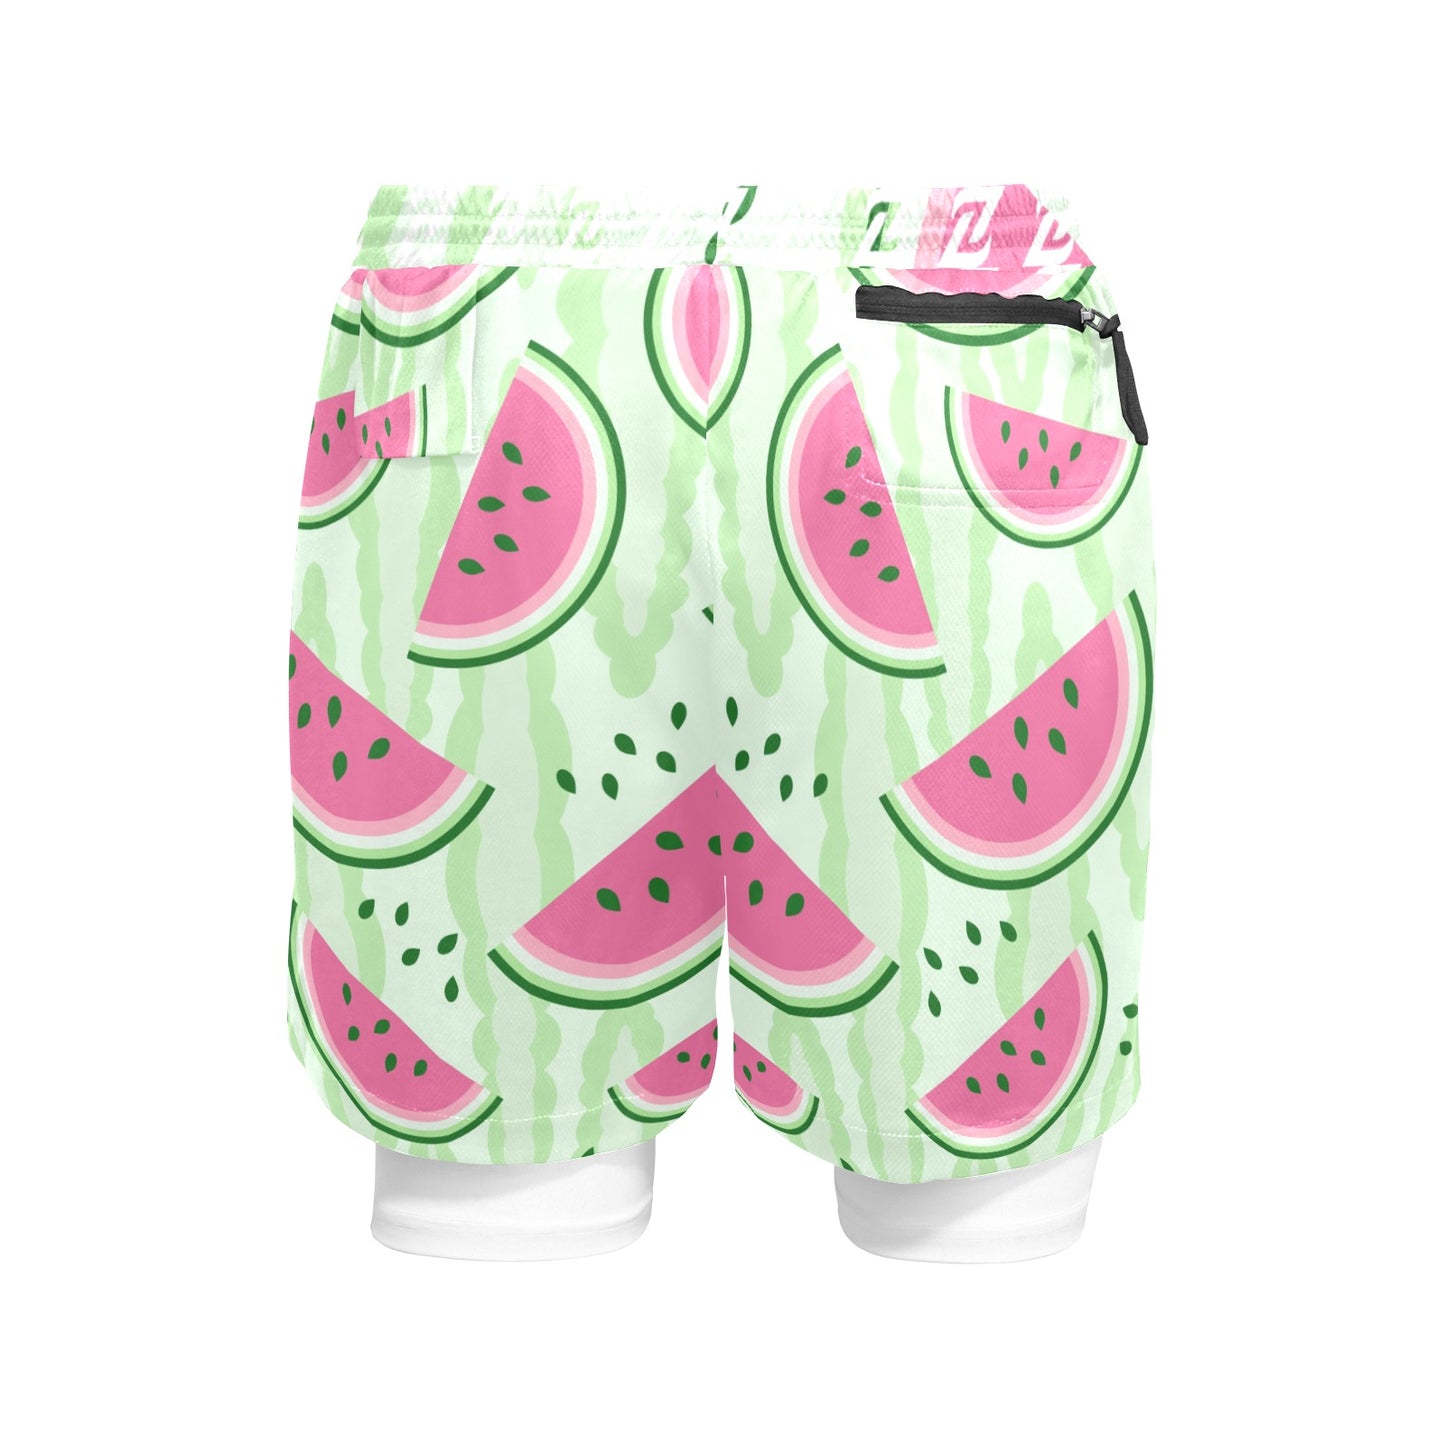 Zen Shorts with Liner - Watermelon